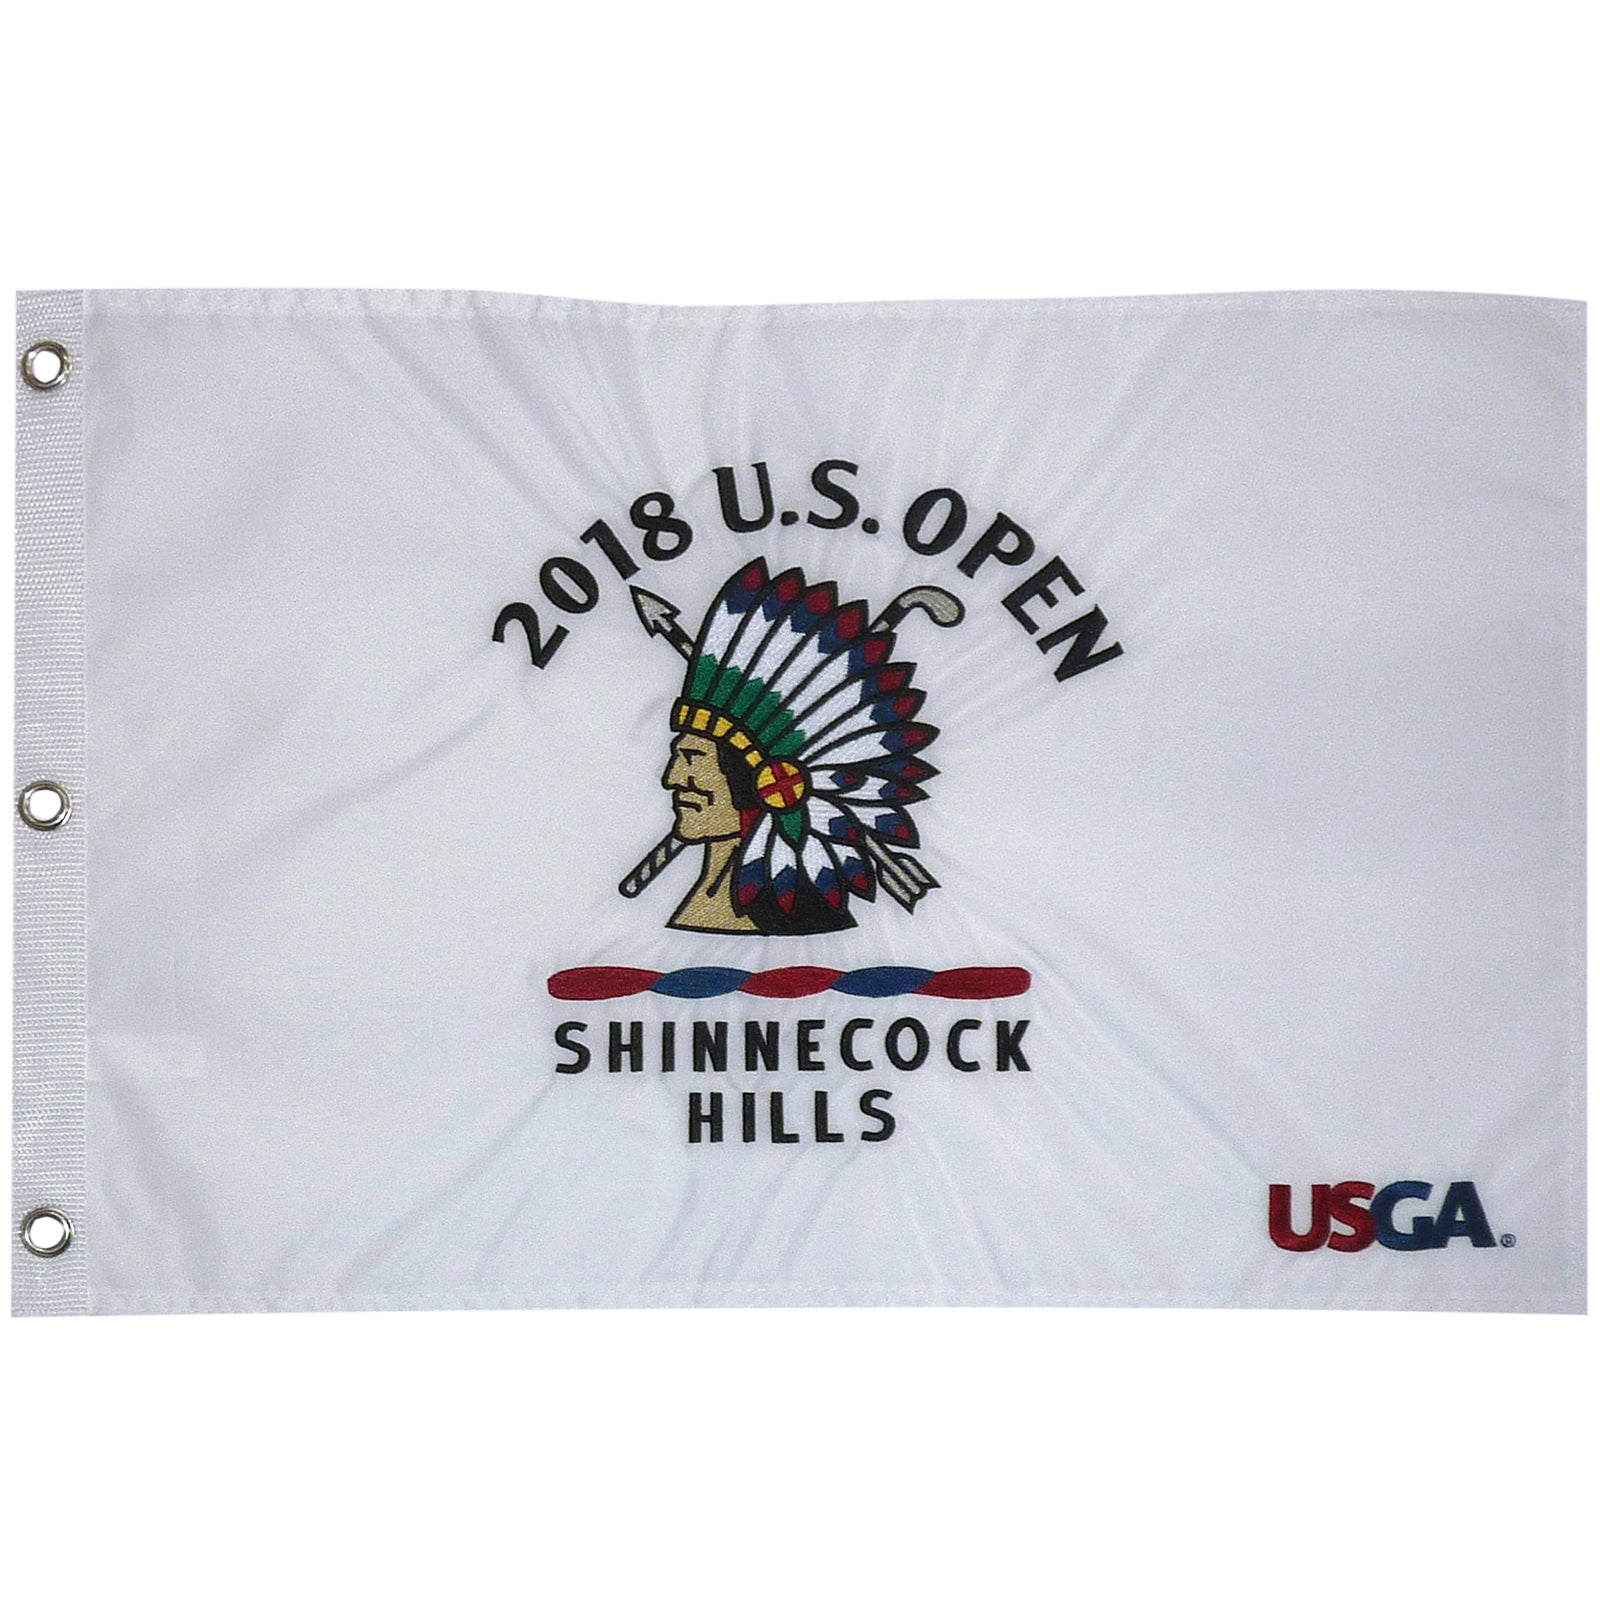 2018 U.S. Open (Shinnecock Embroidered) Golf Pin Flag - Brooks Koepka Champion